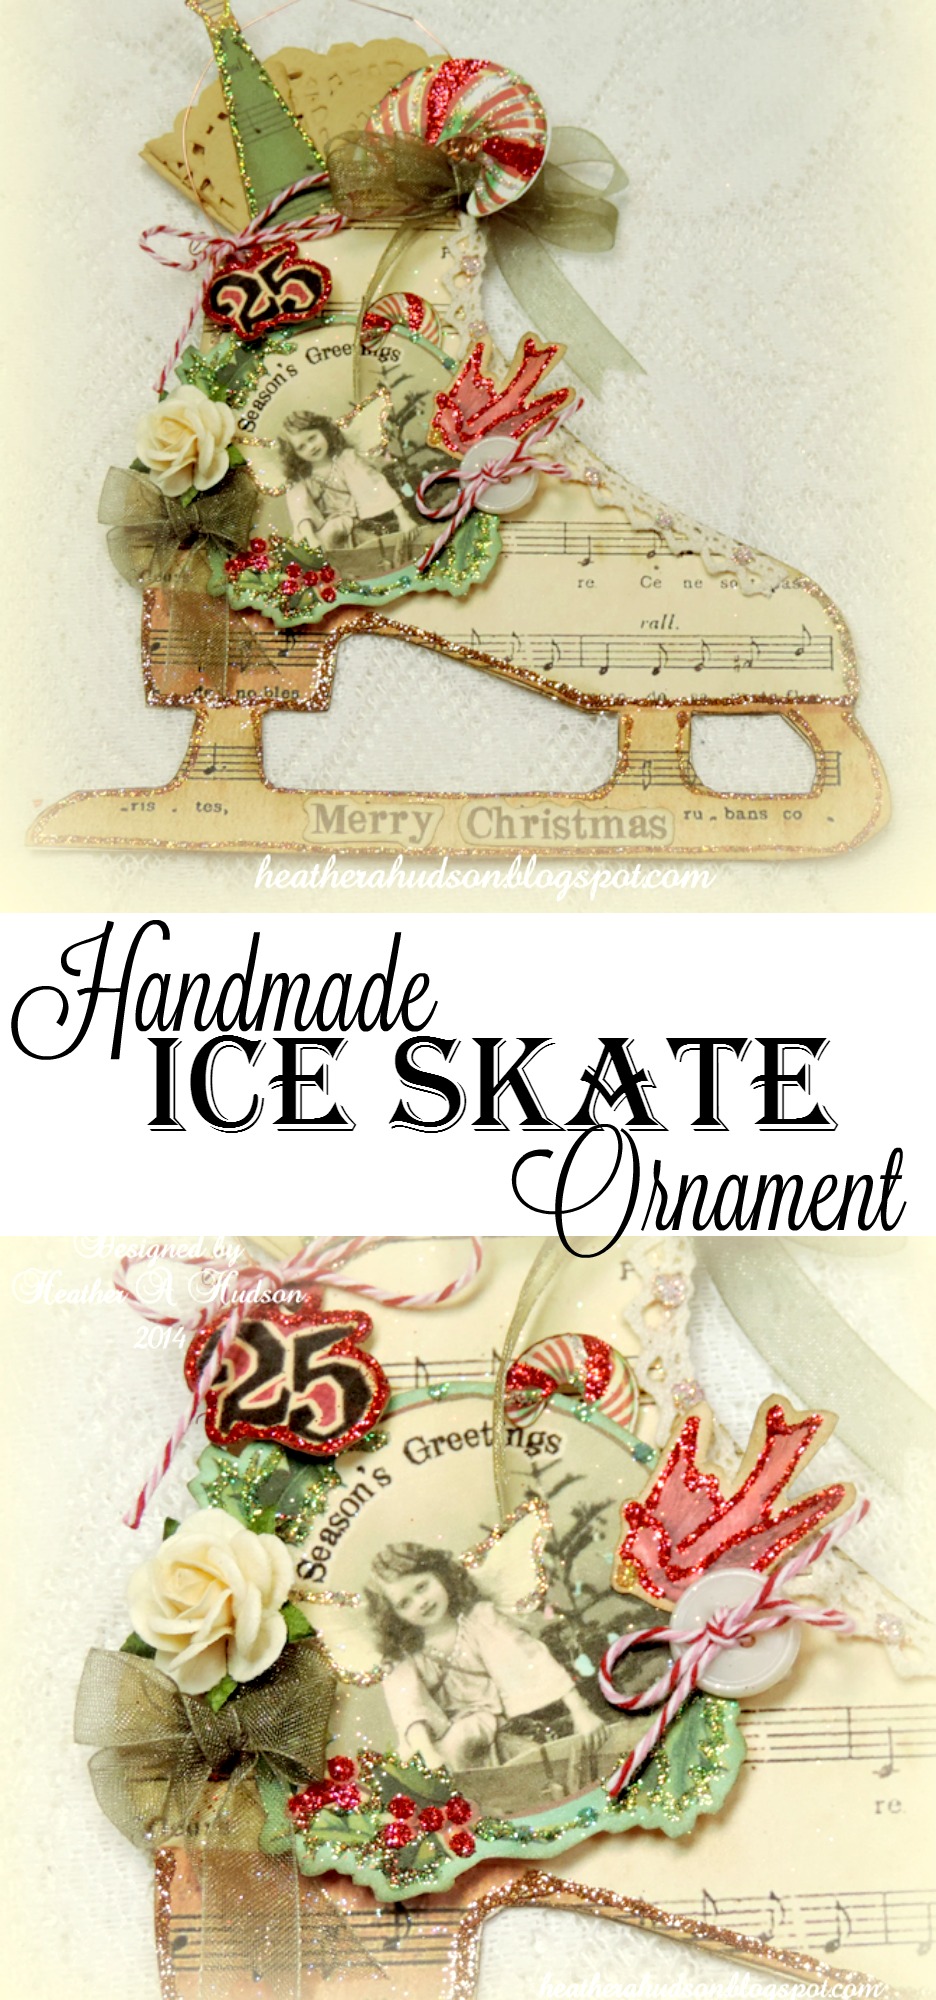 Handmade Ice Skate Ornament - The Graphics Fairy